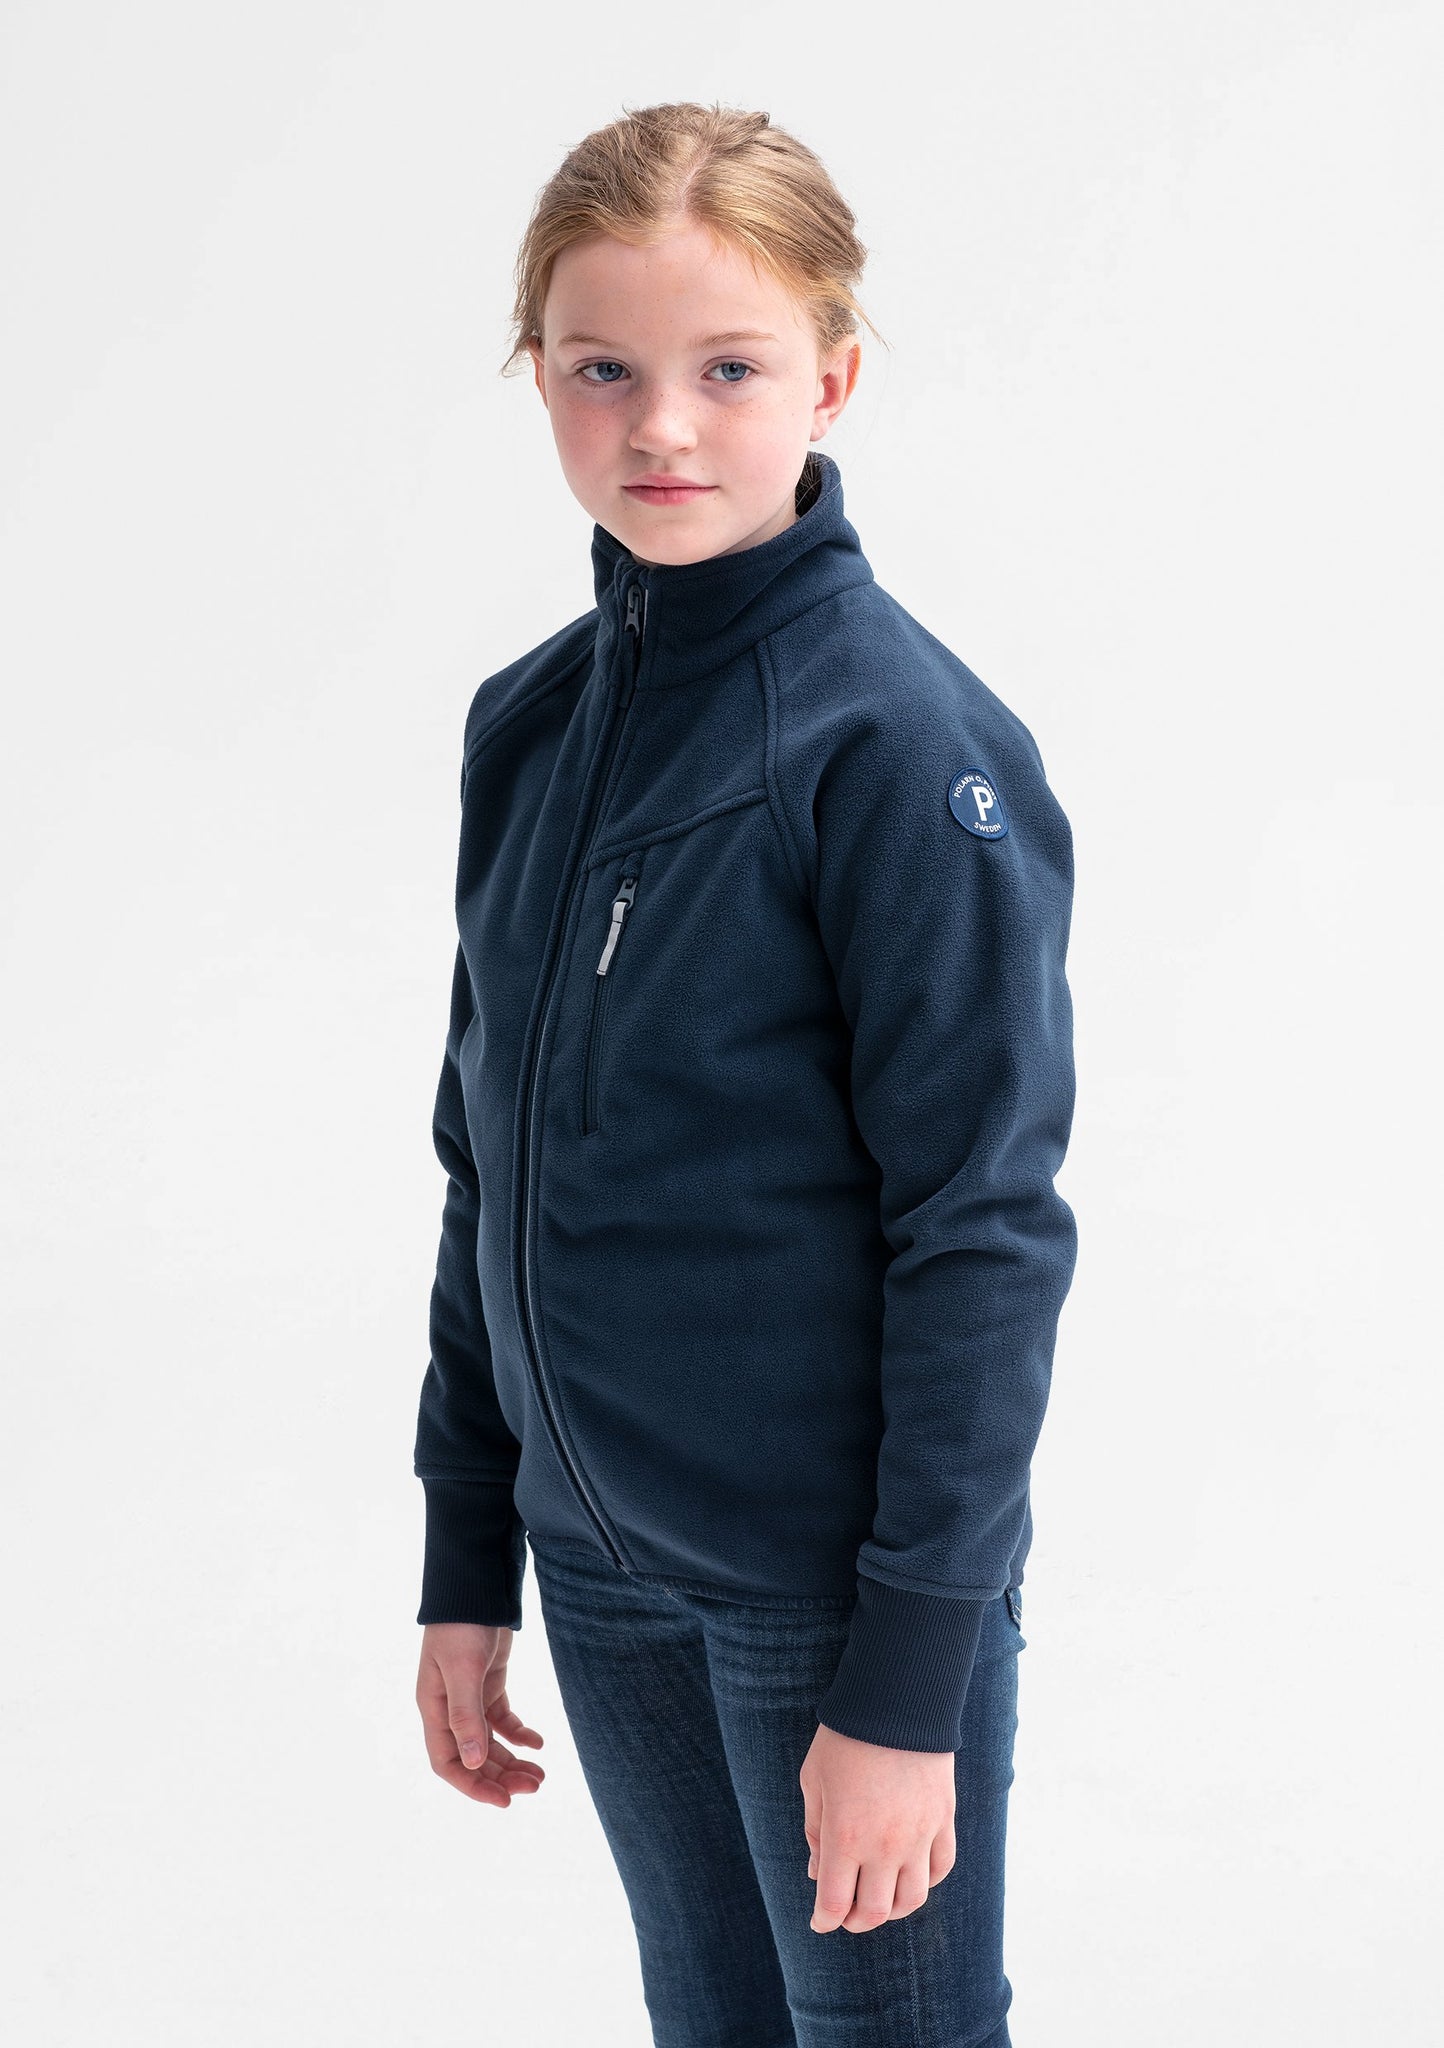 Kids Waterproof Fleece Jacket